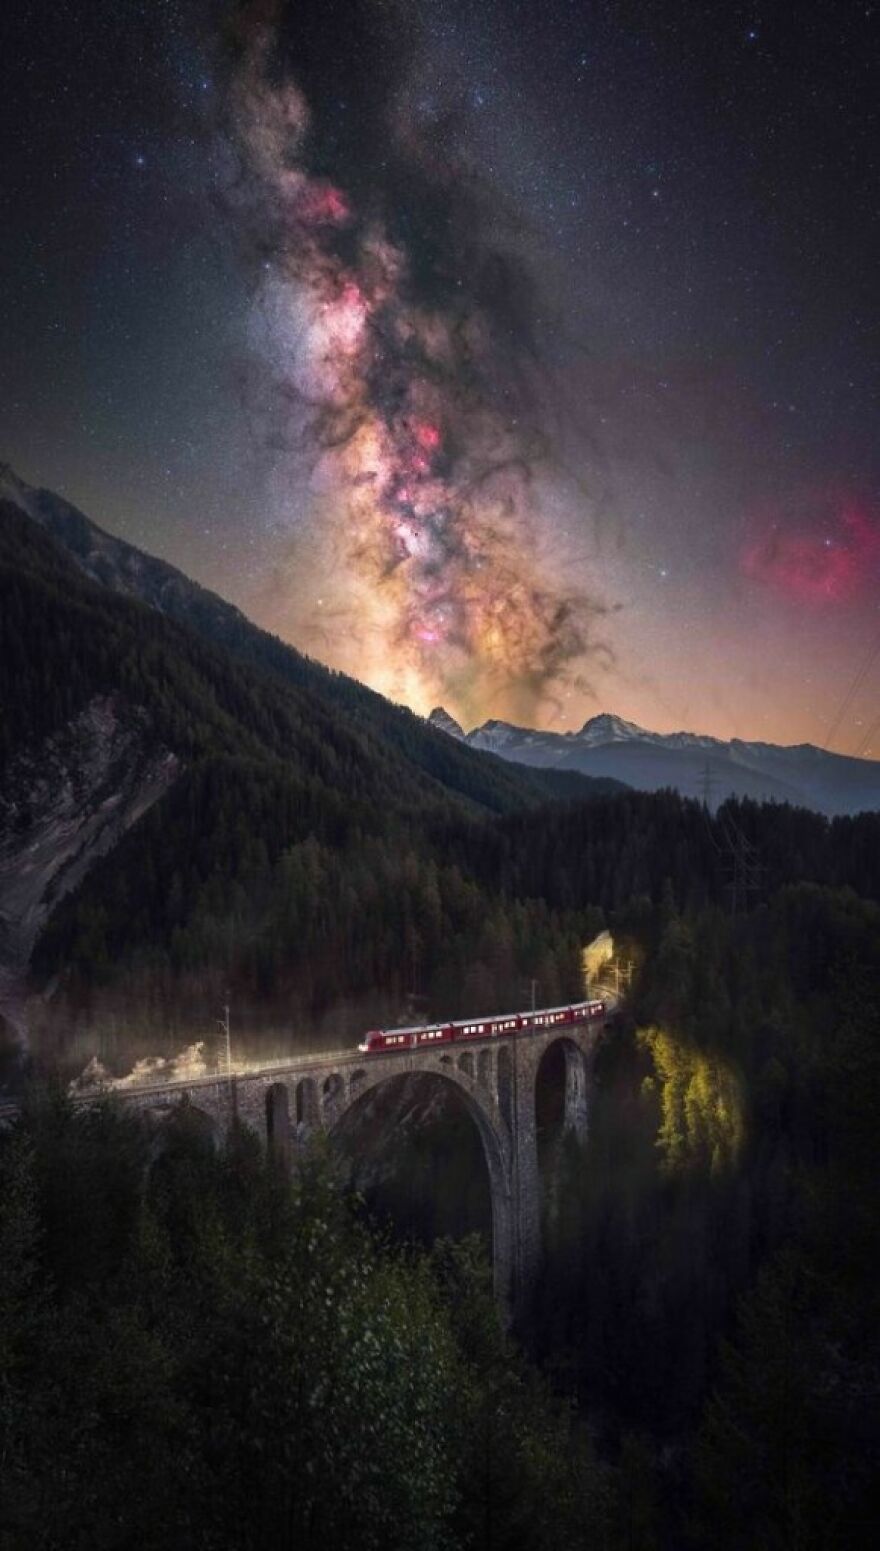 “The Night Train” – Alexander Forst